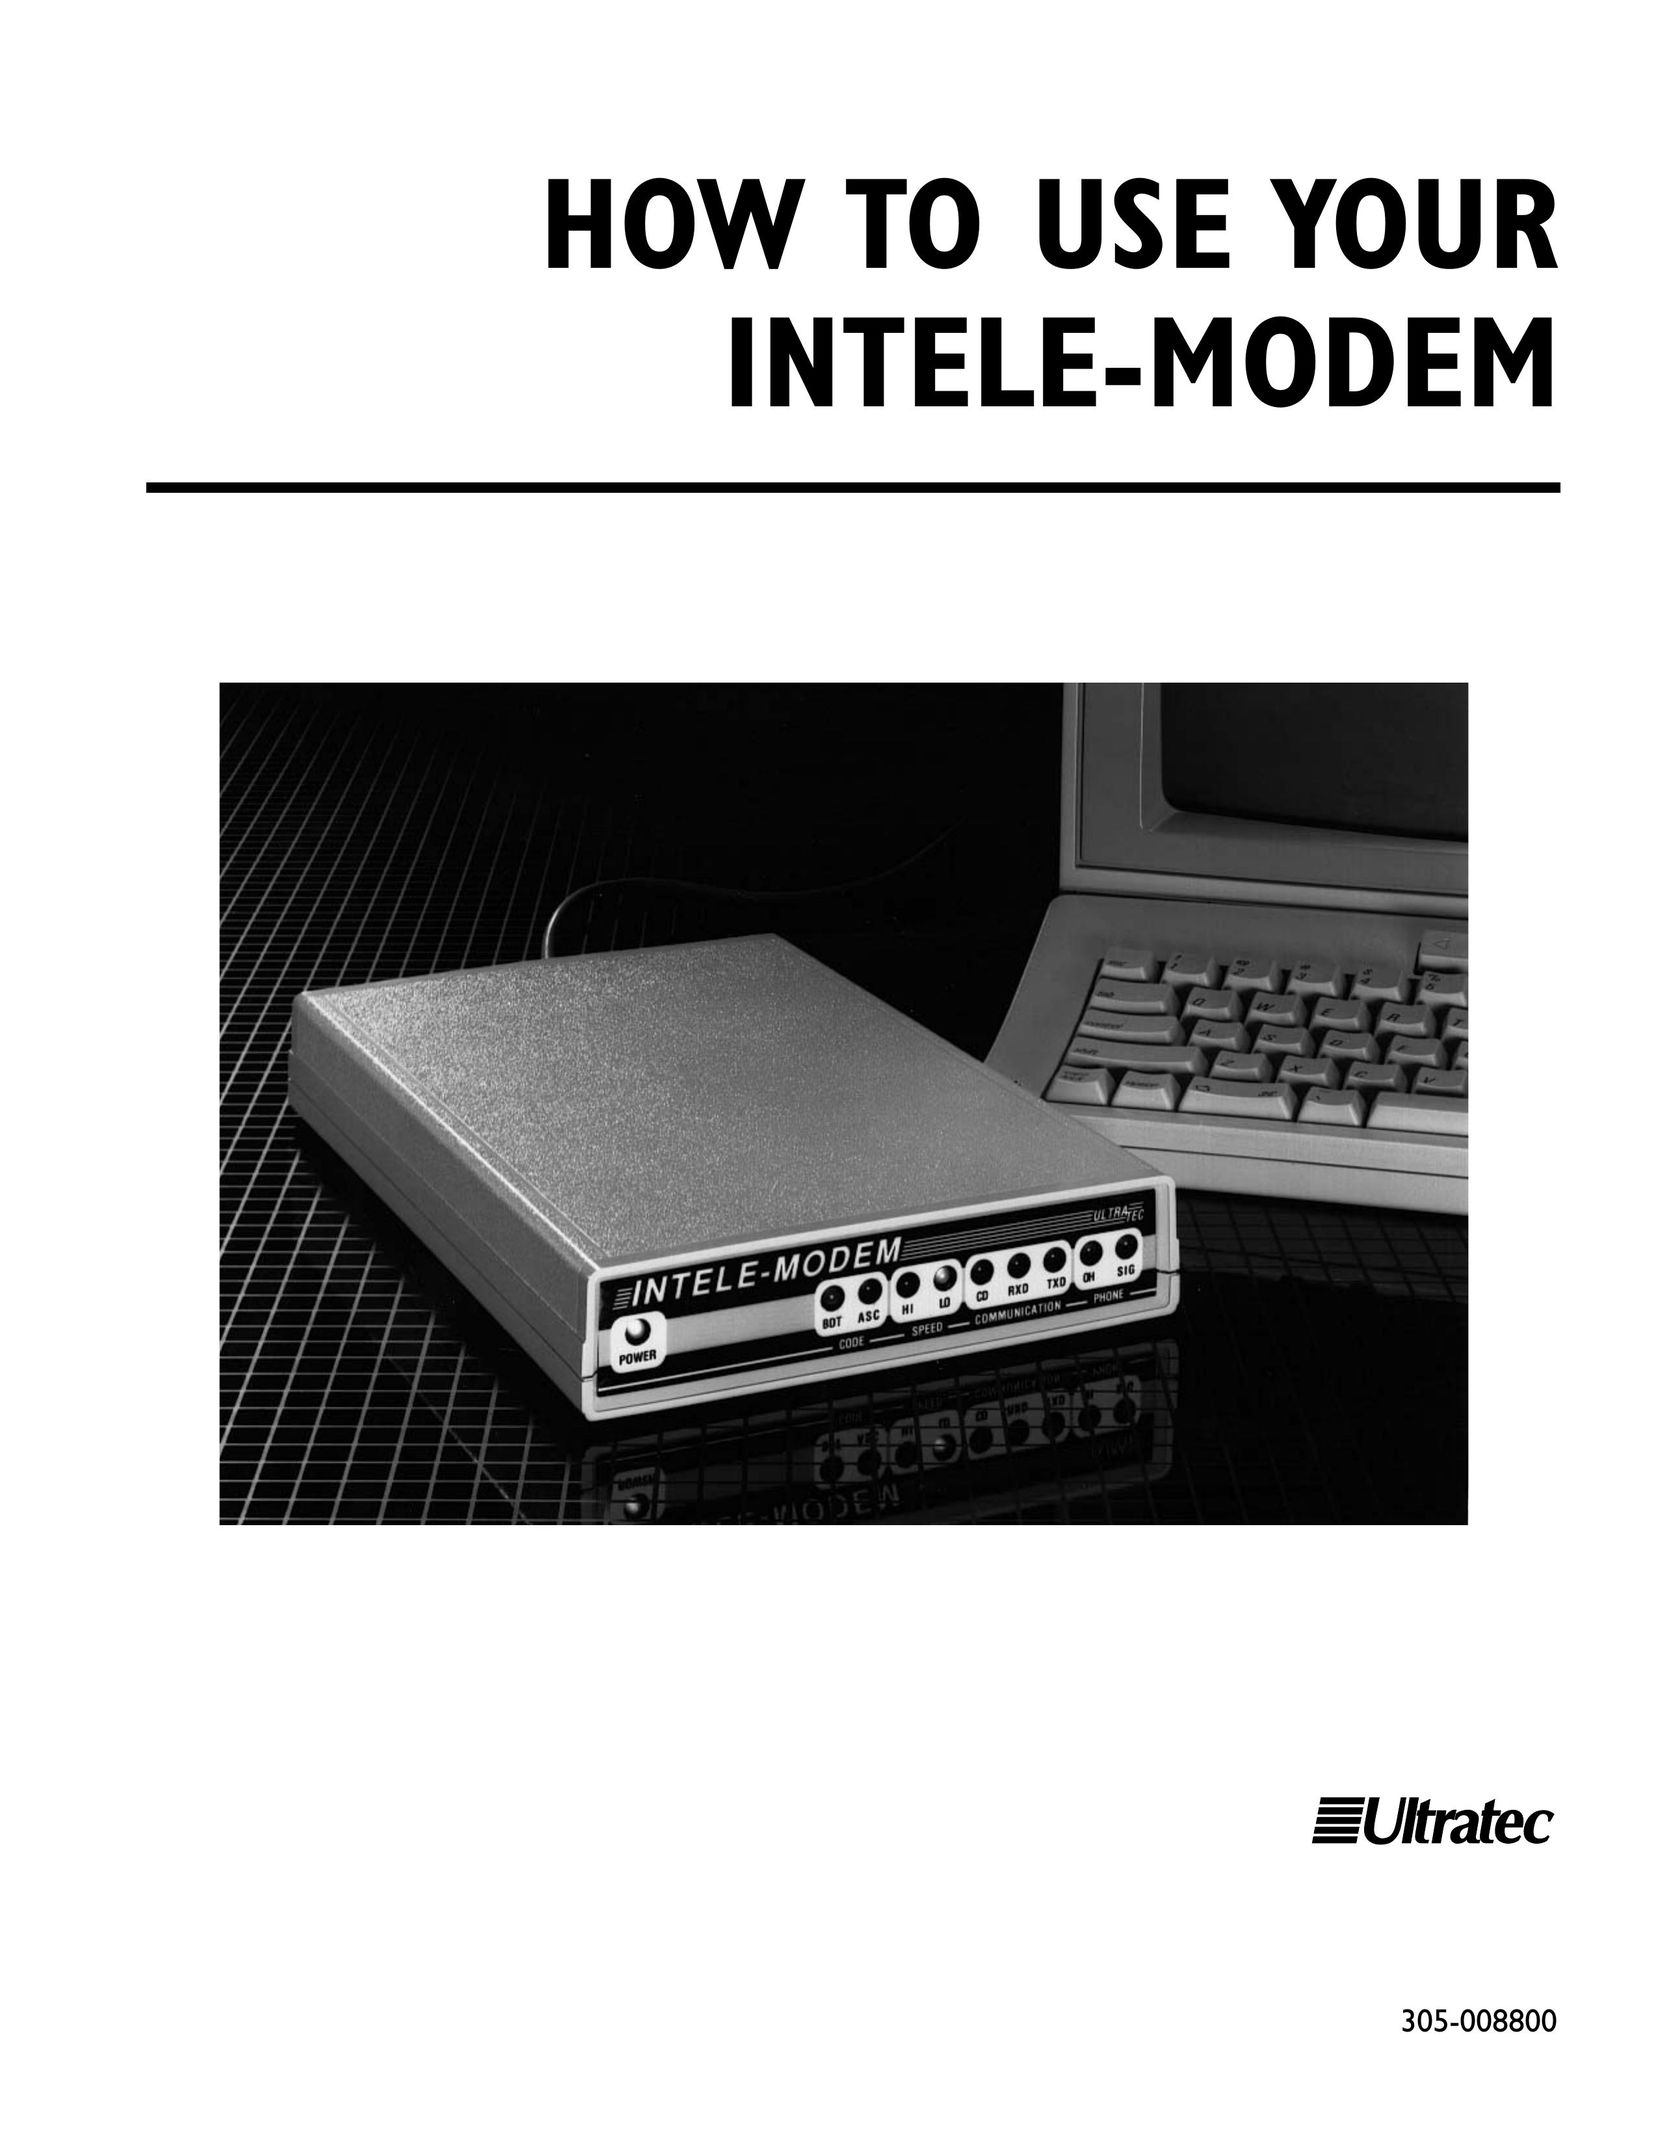 Ultratec INTELE-MODEM Network Card User Manual